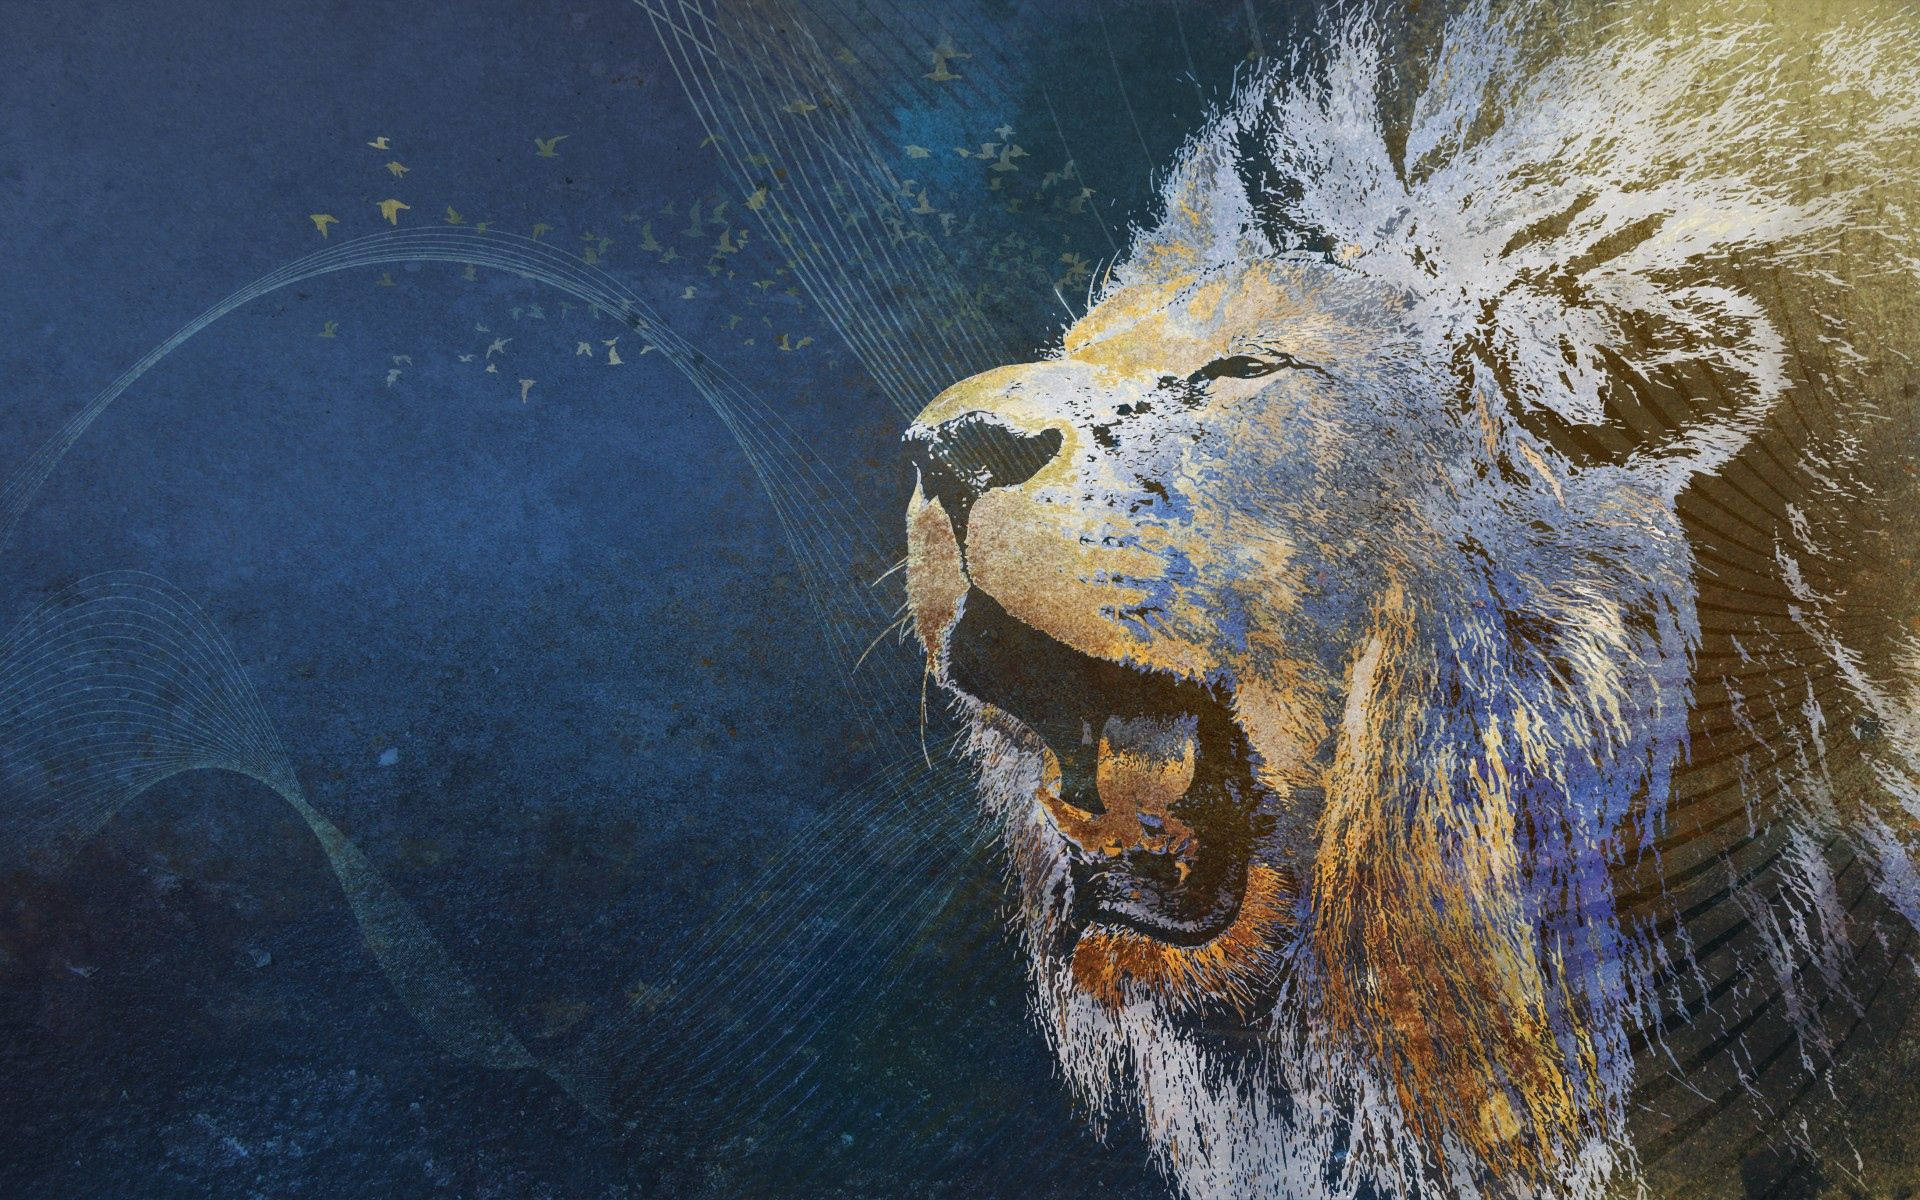 Lion Digital Art Image wallpaper.